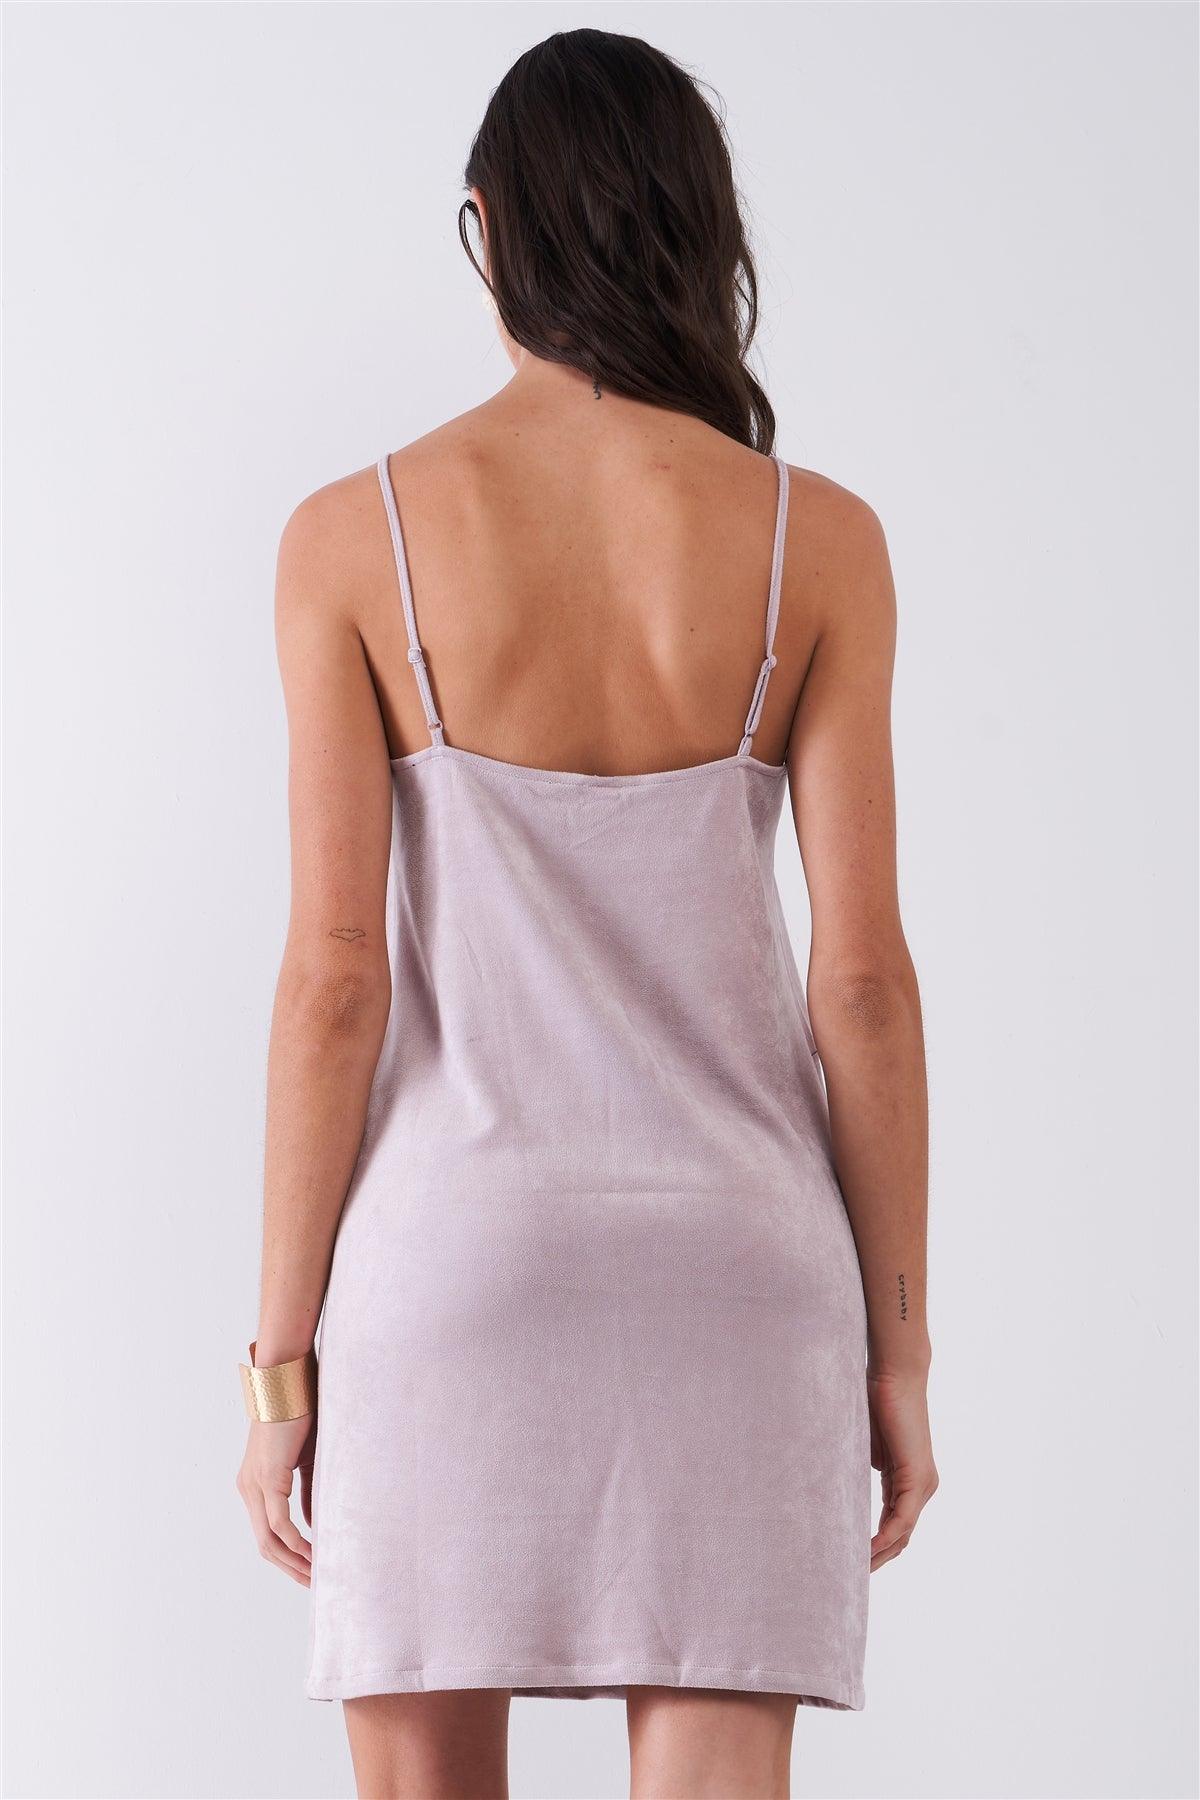 Pastel Mauve Suede Sleeveless Lace Trim V-Neck Mini Dress /1-2-2-1